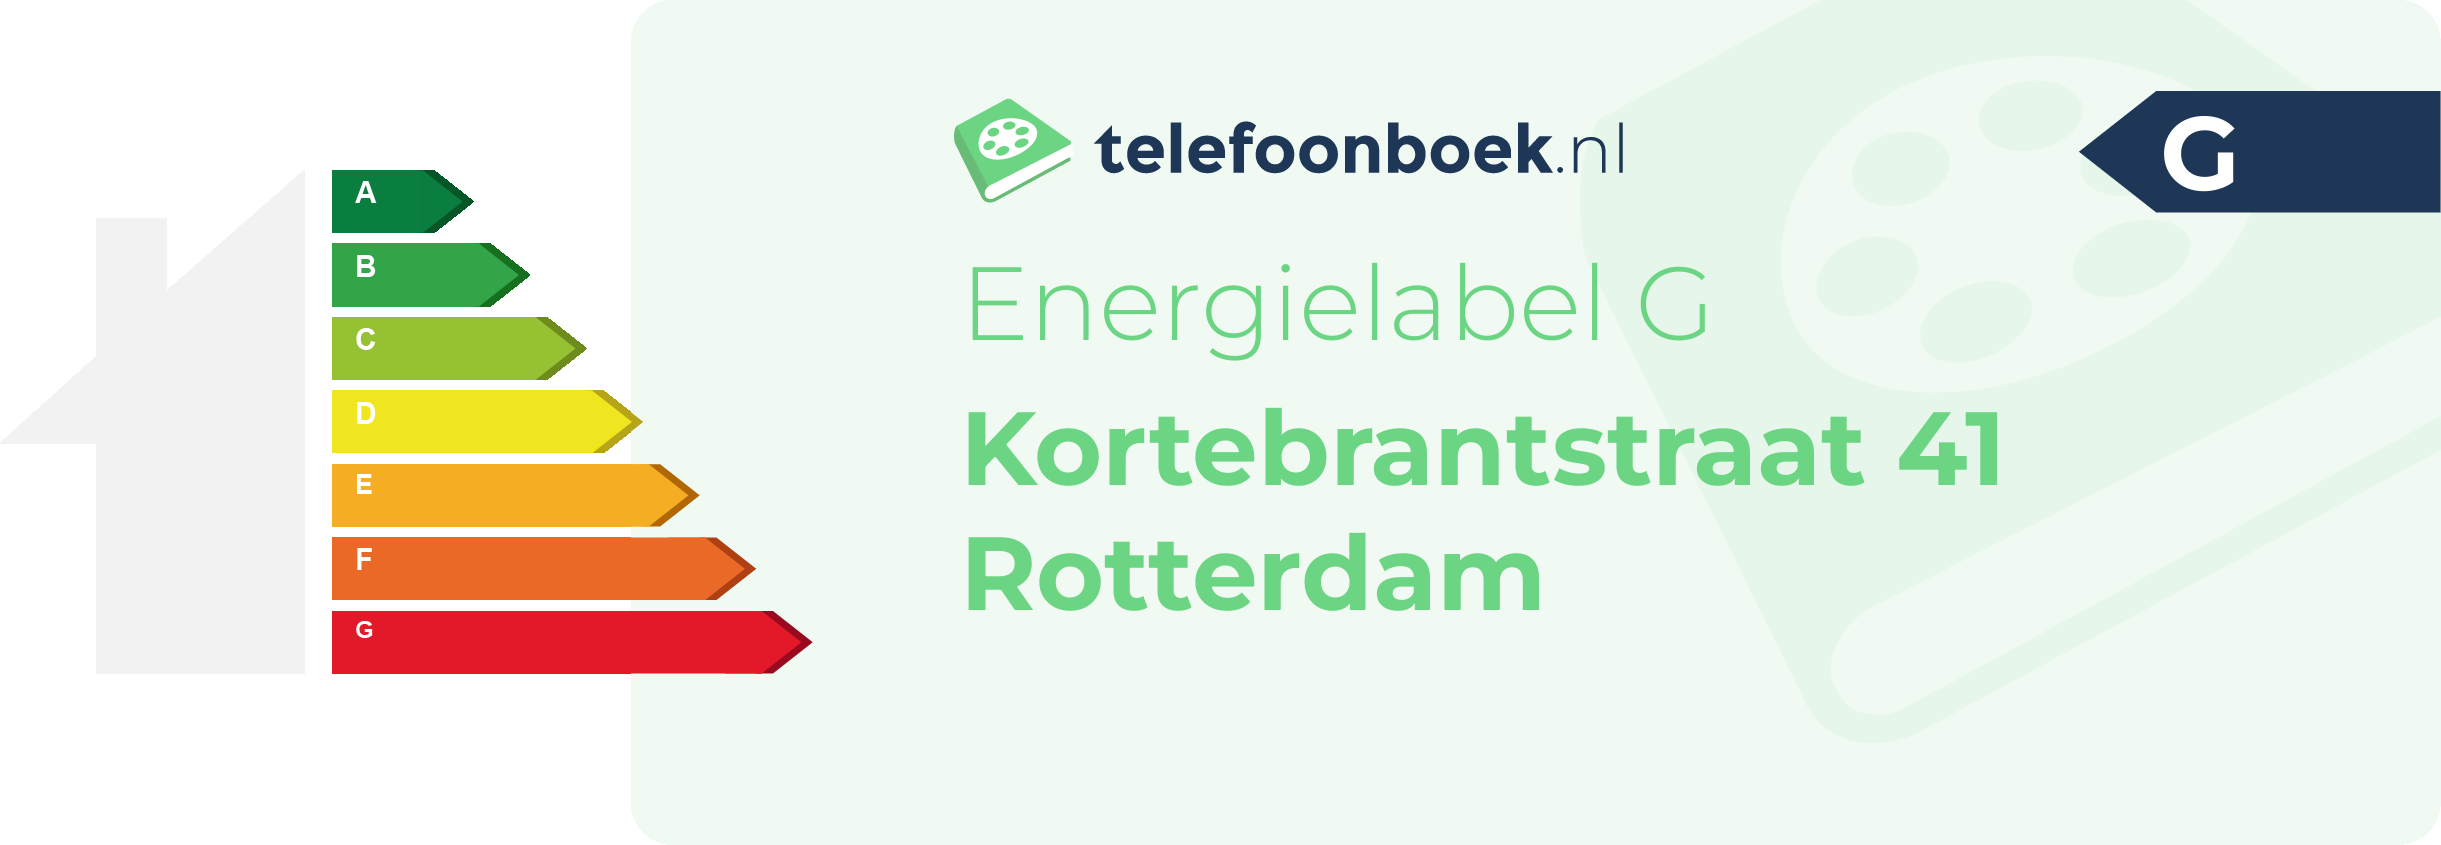 Energielabel Kortebrantstraat 41 Rotterdam